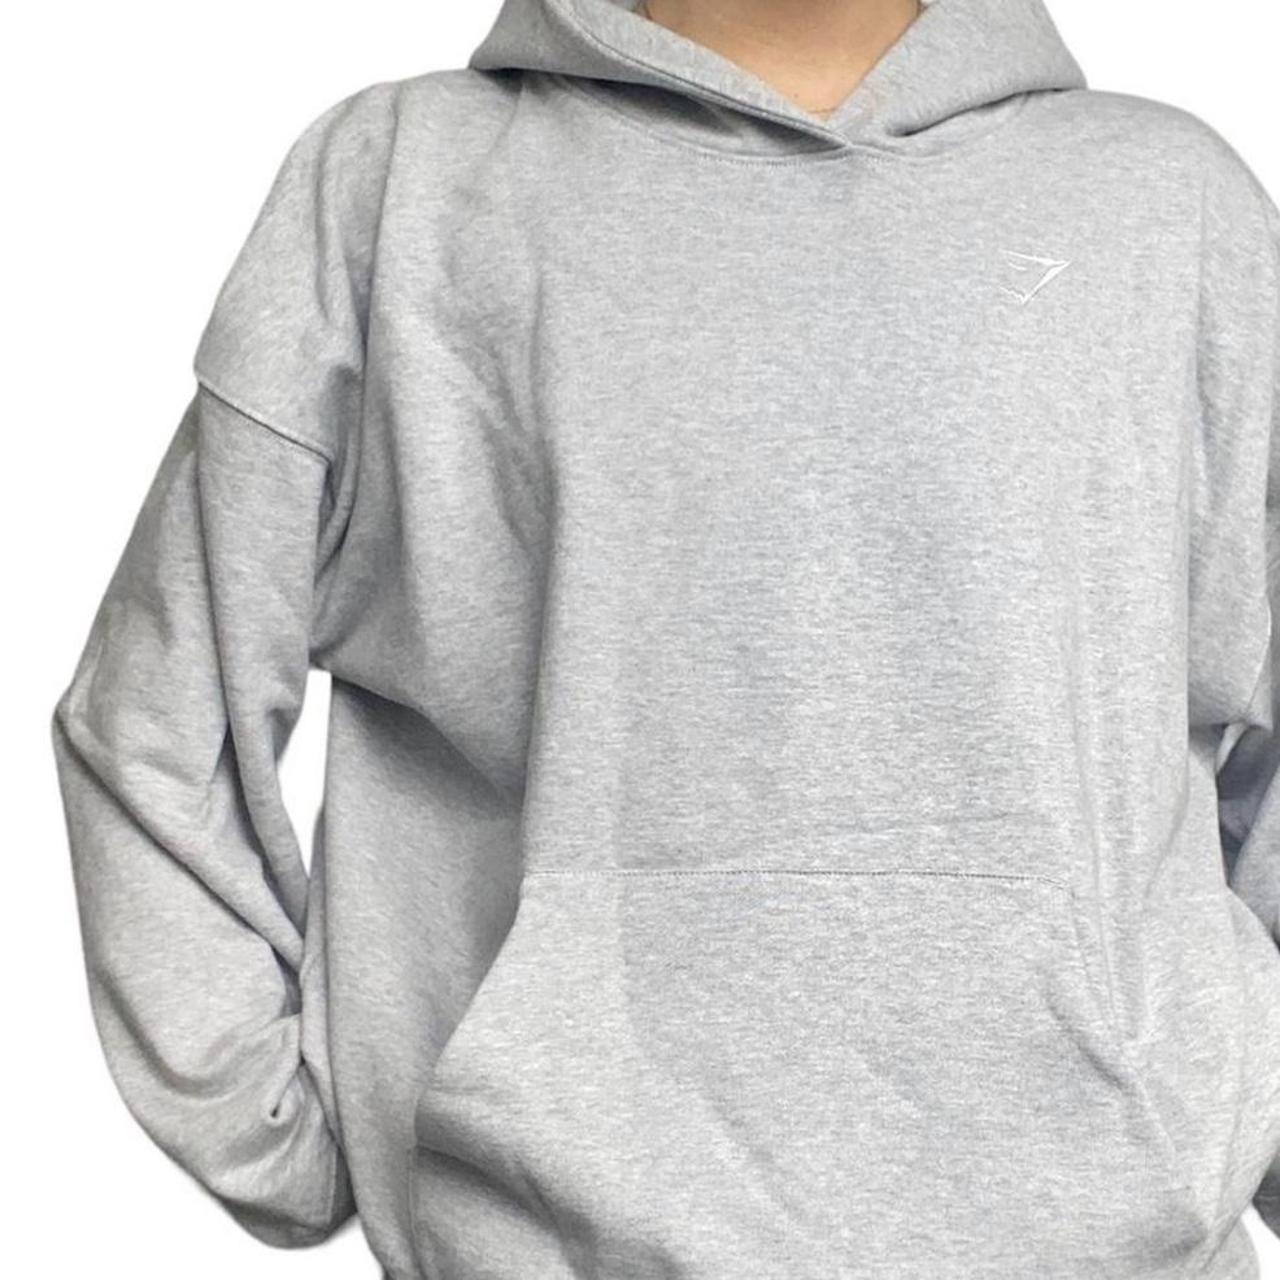 Gymshark rest day sweats hoodie grey Size Large - Depop